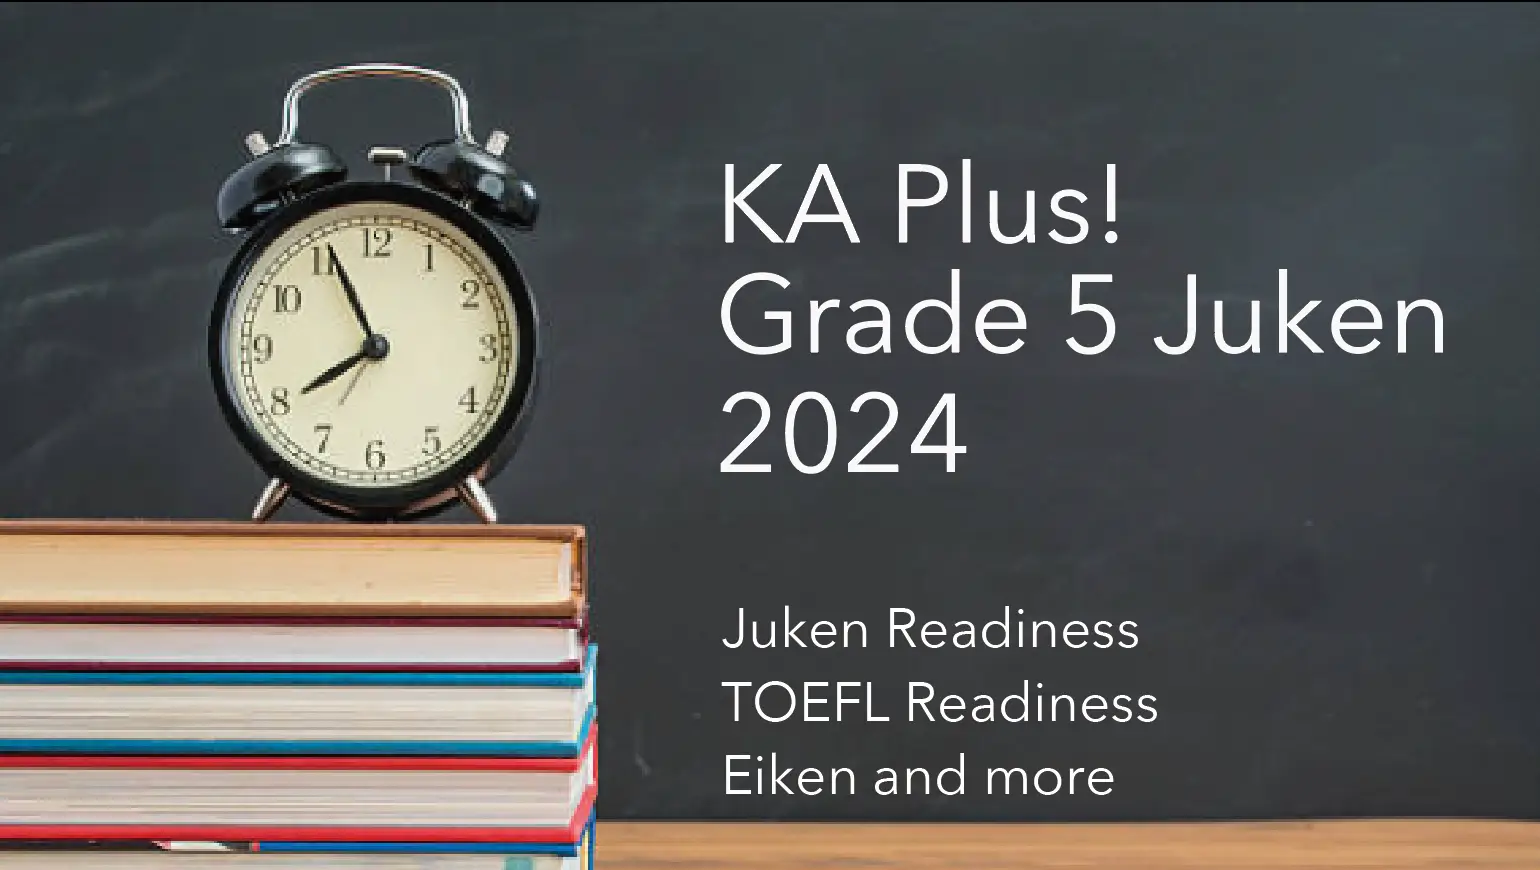 KA Plus! Grade 5 Juken 2024